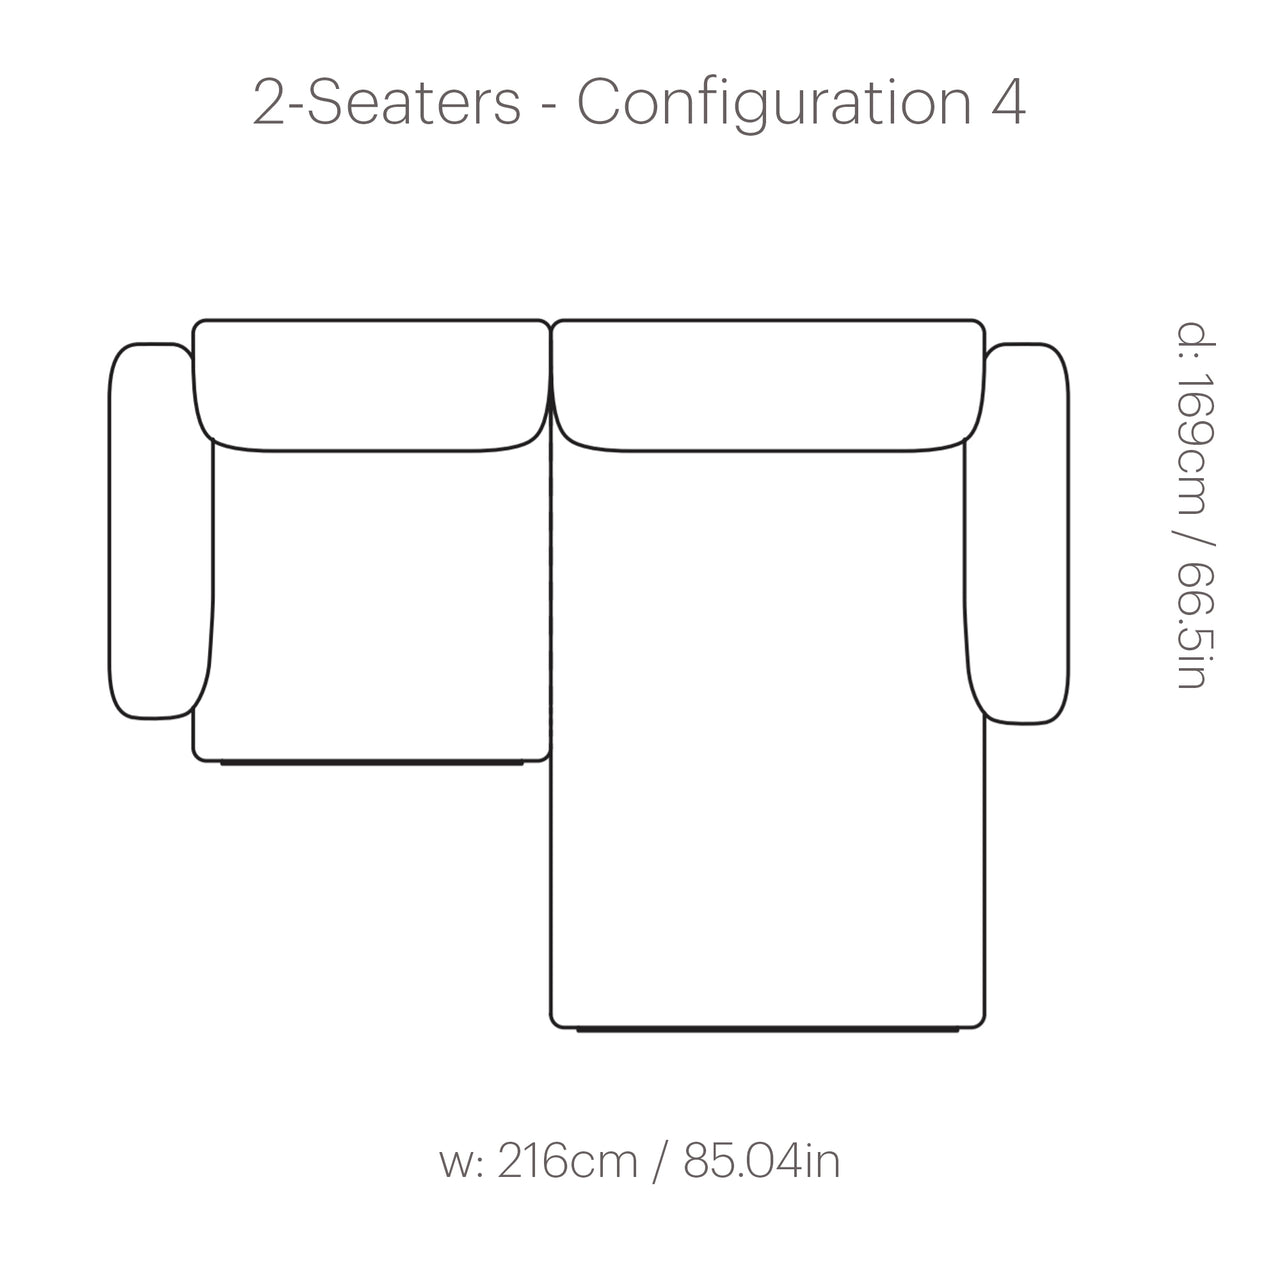 In Situ Modular Sofa: 2 Seater + Configuration 4